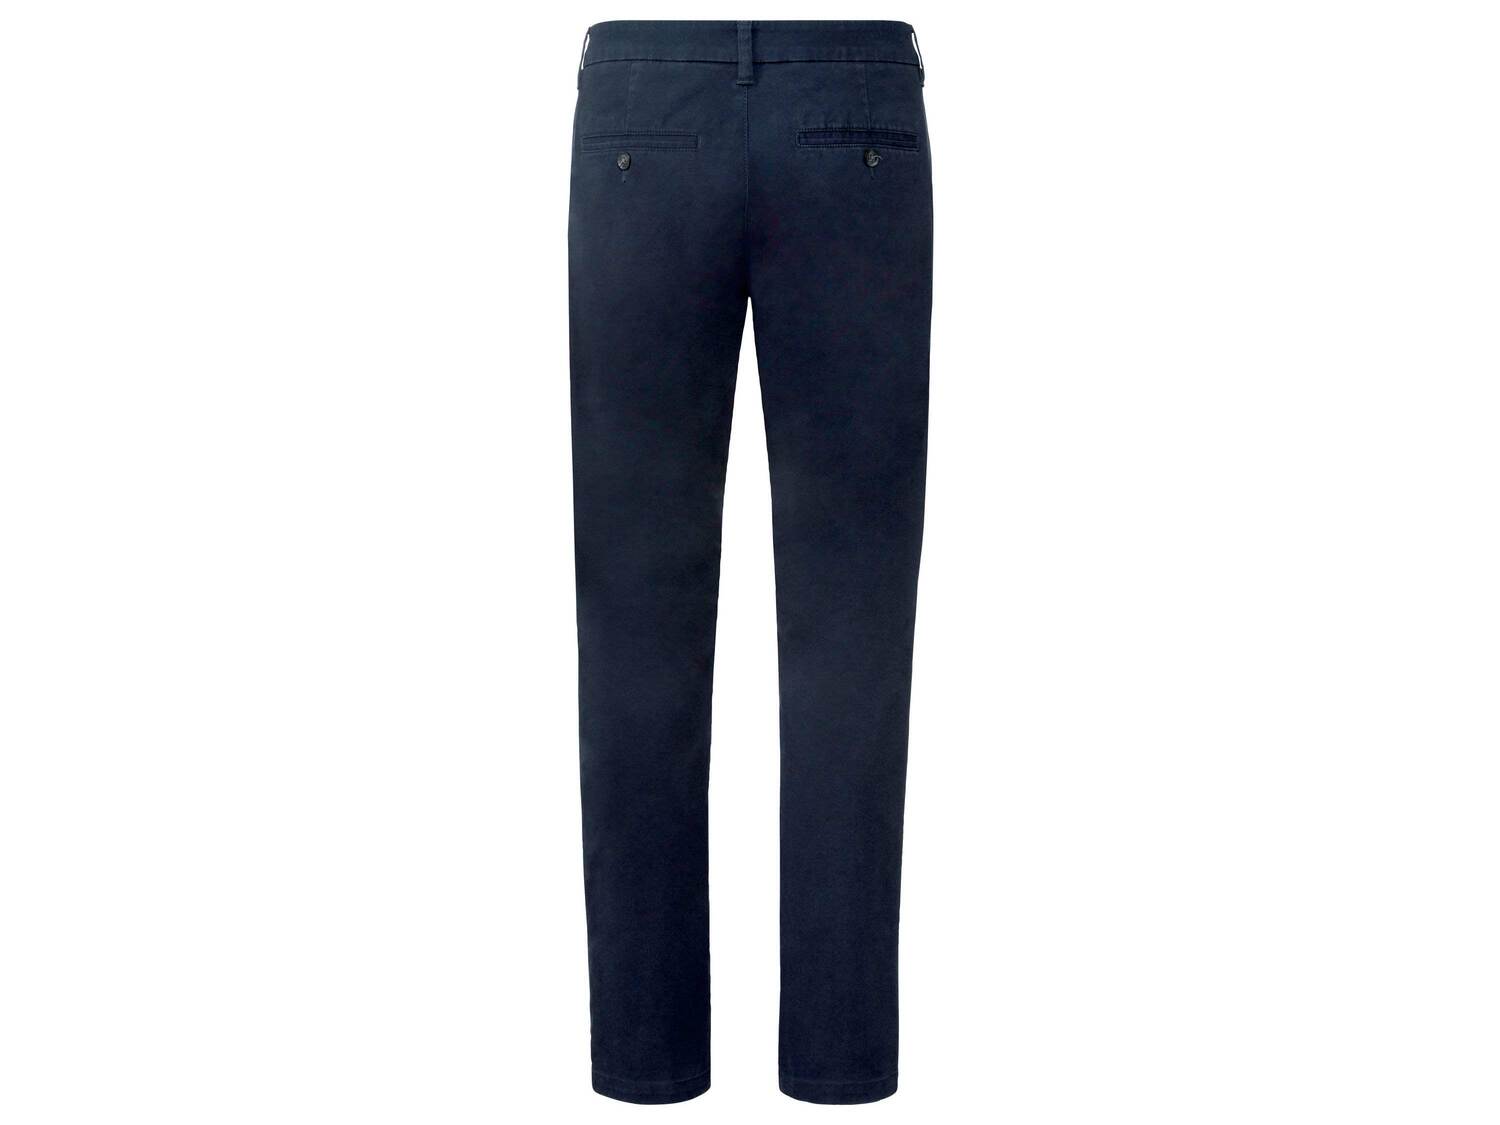 Spodnie męskie chinosy Livergy, cena 44,99 PLN 
- rozmiary: 48-56
- 98% bawełny, ...